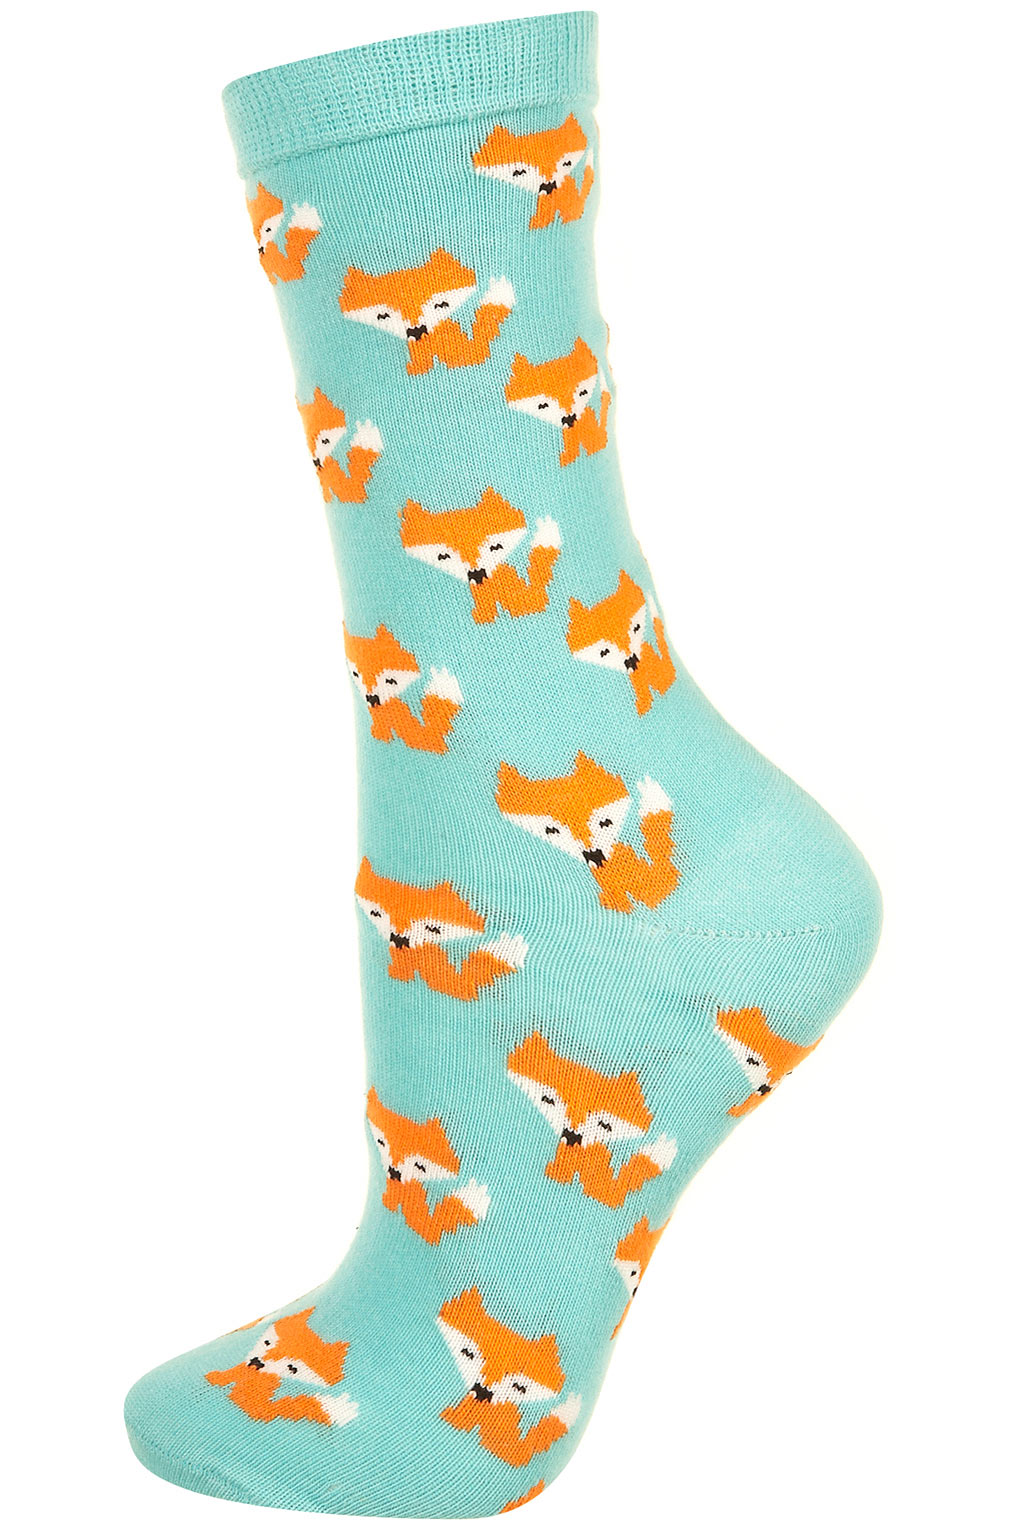 Lyst - Topshop Aqua Foxy Fox Ankle Socks in Blue